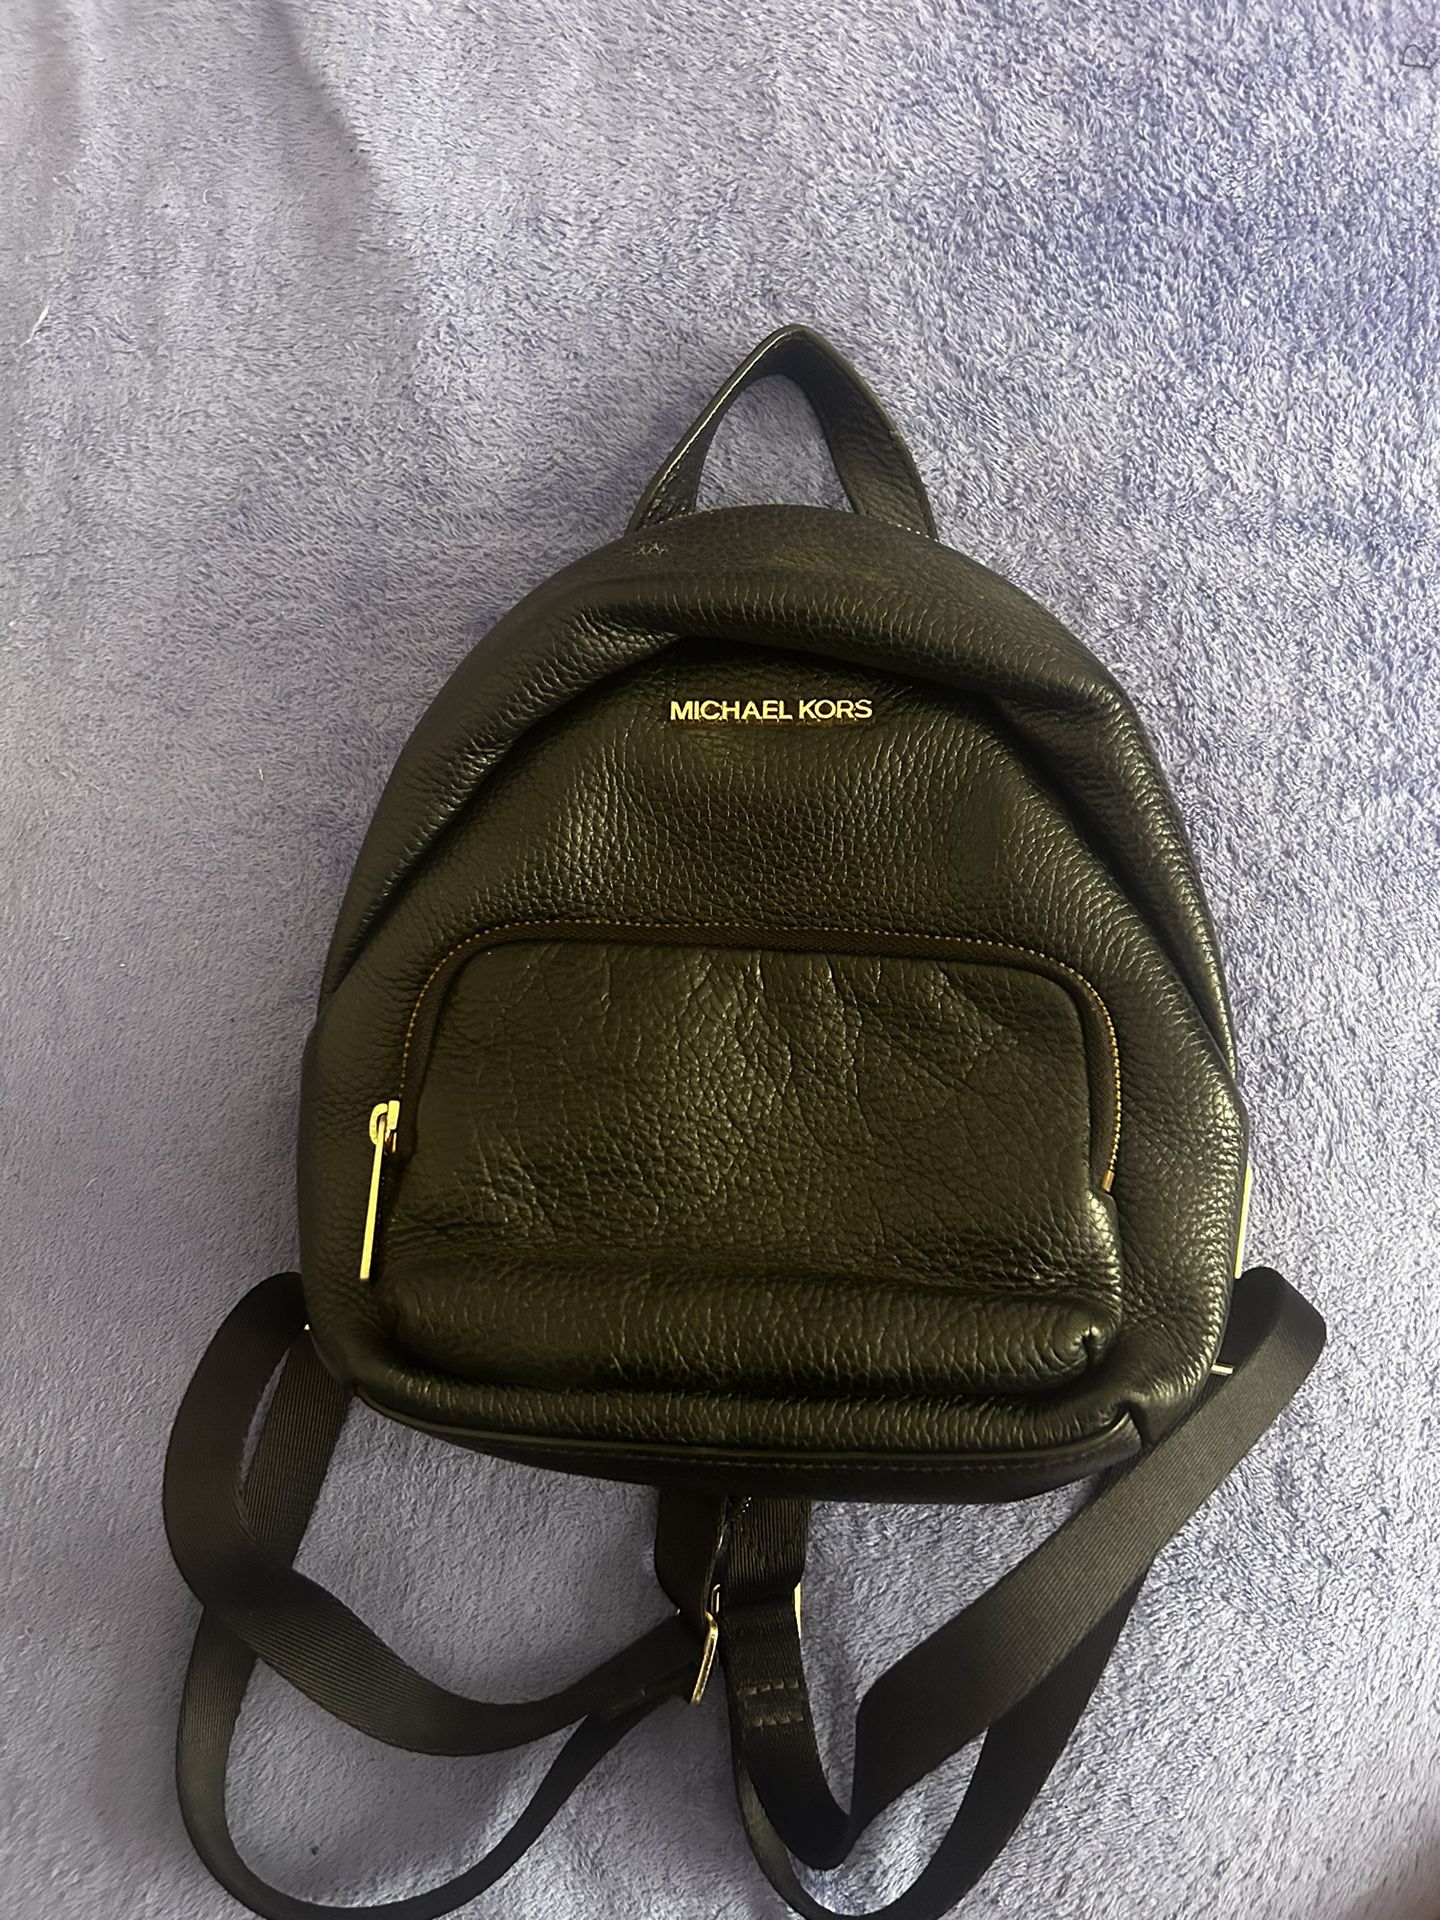 Michael Kors Black Leather Mini Backpack 